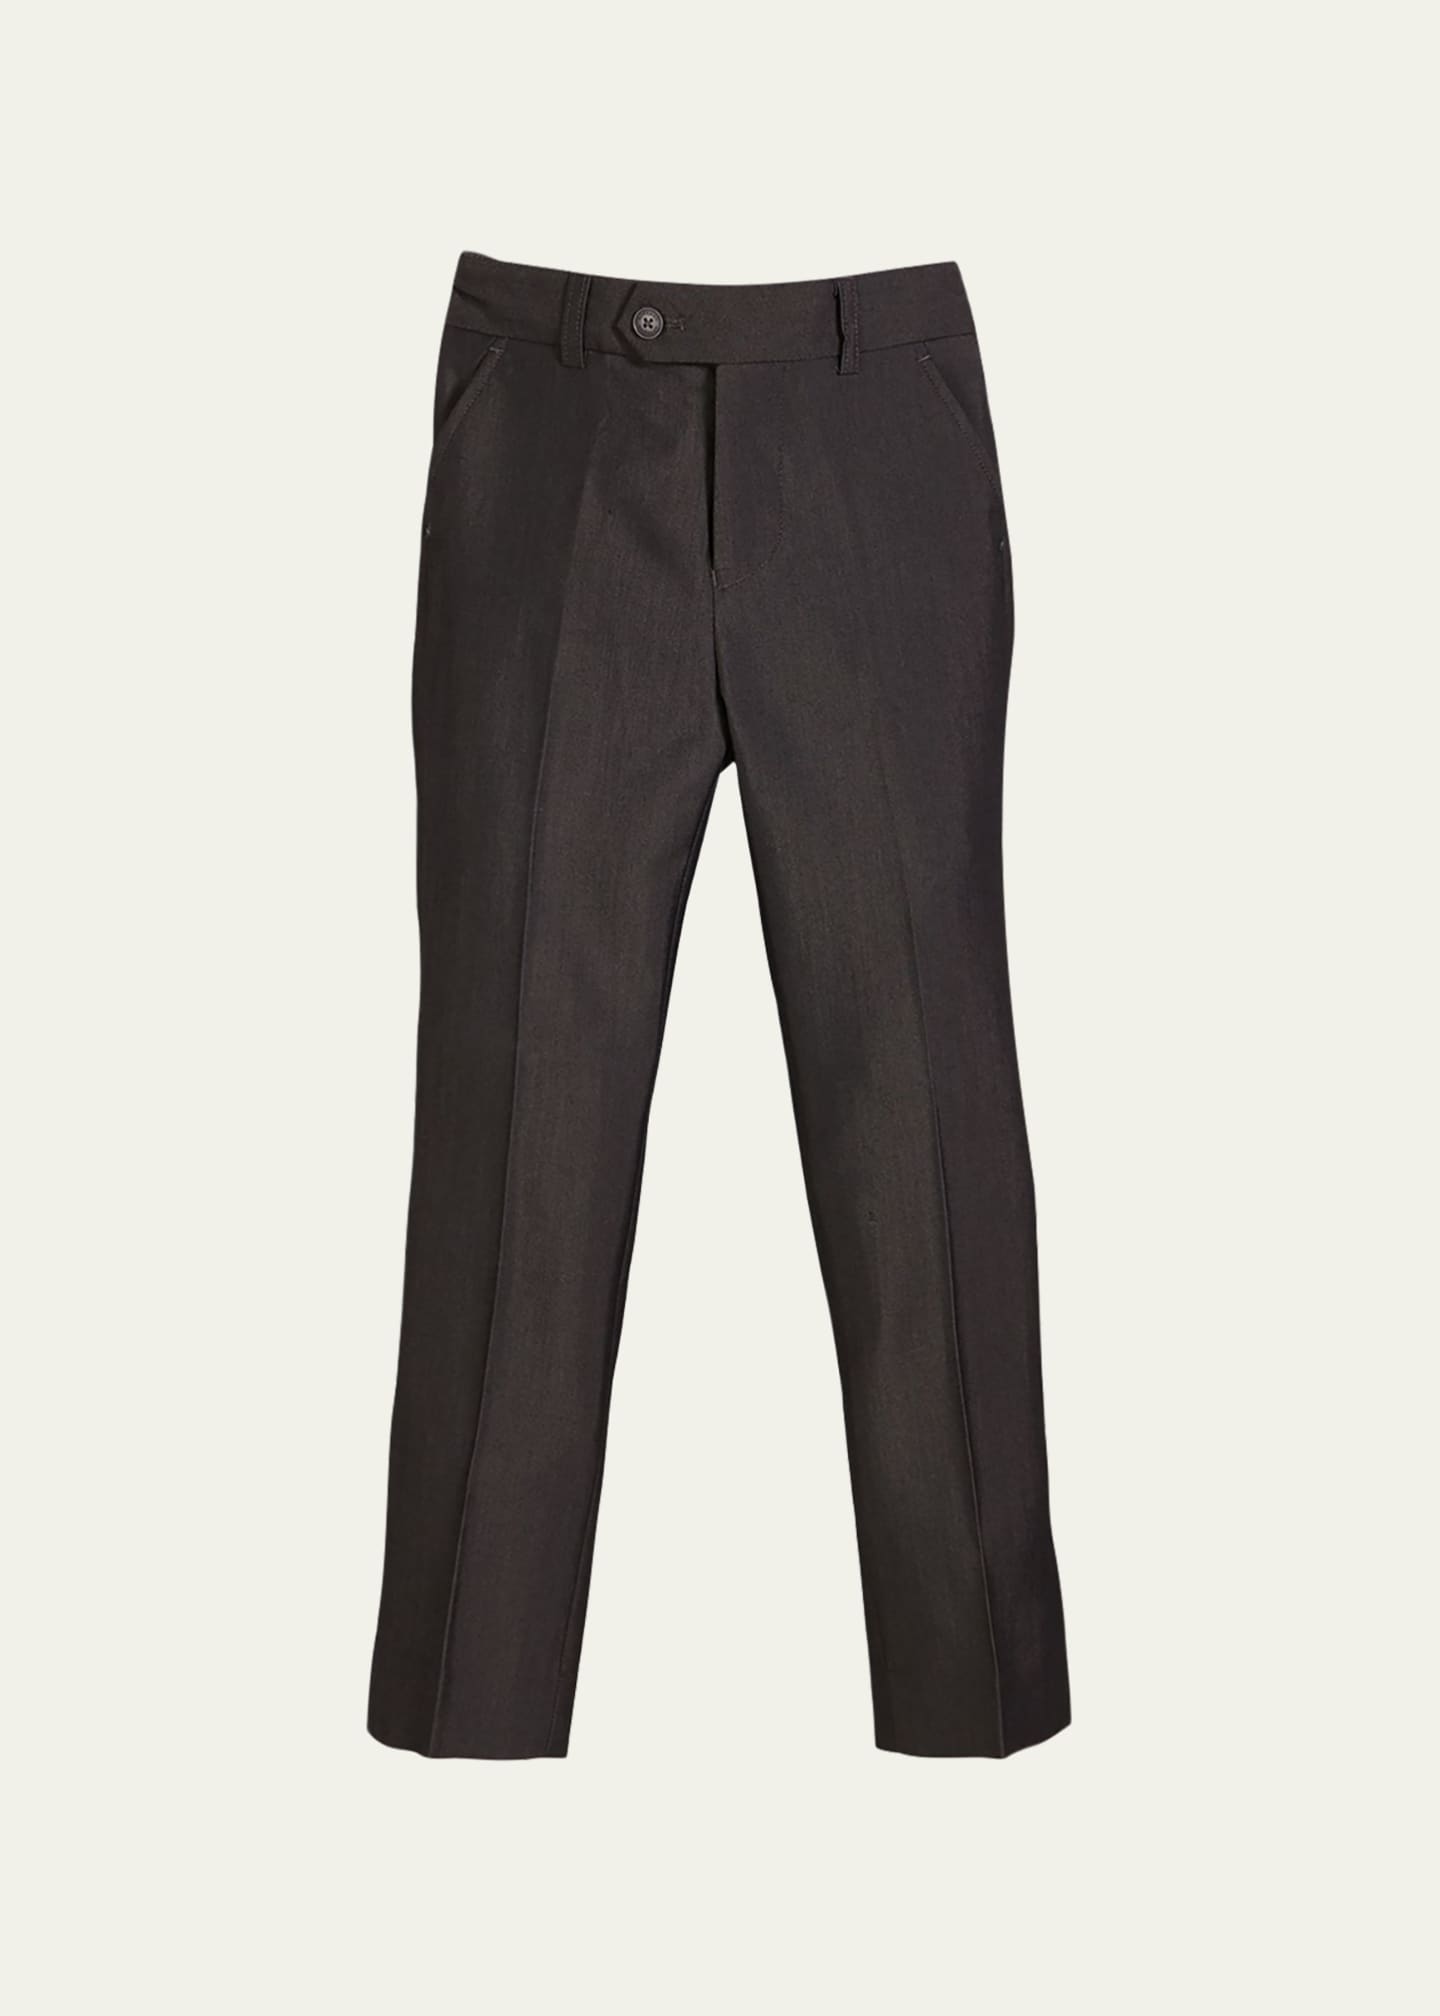 Appaman Slim Suit Pants, Charcoal, Size 4-14 Image 1 of 2